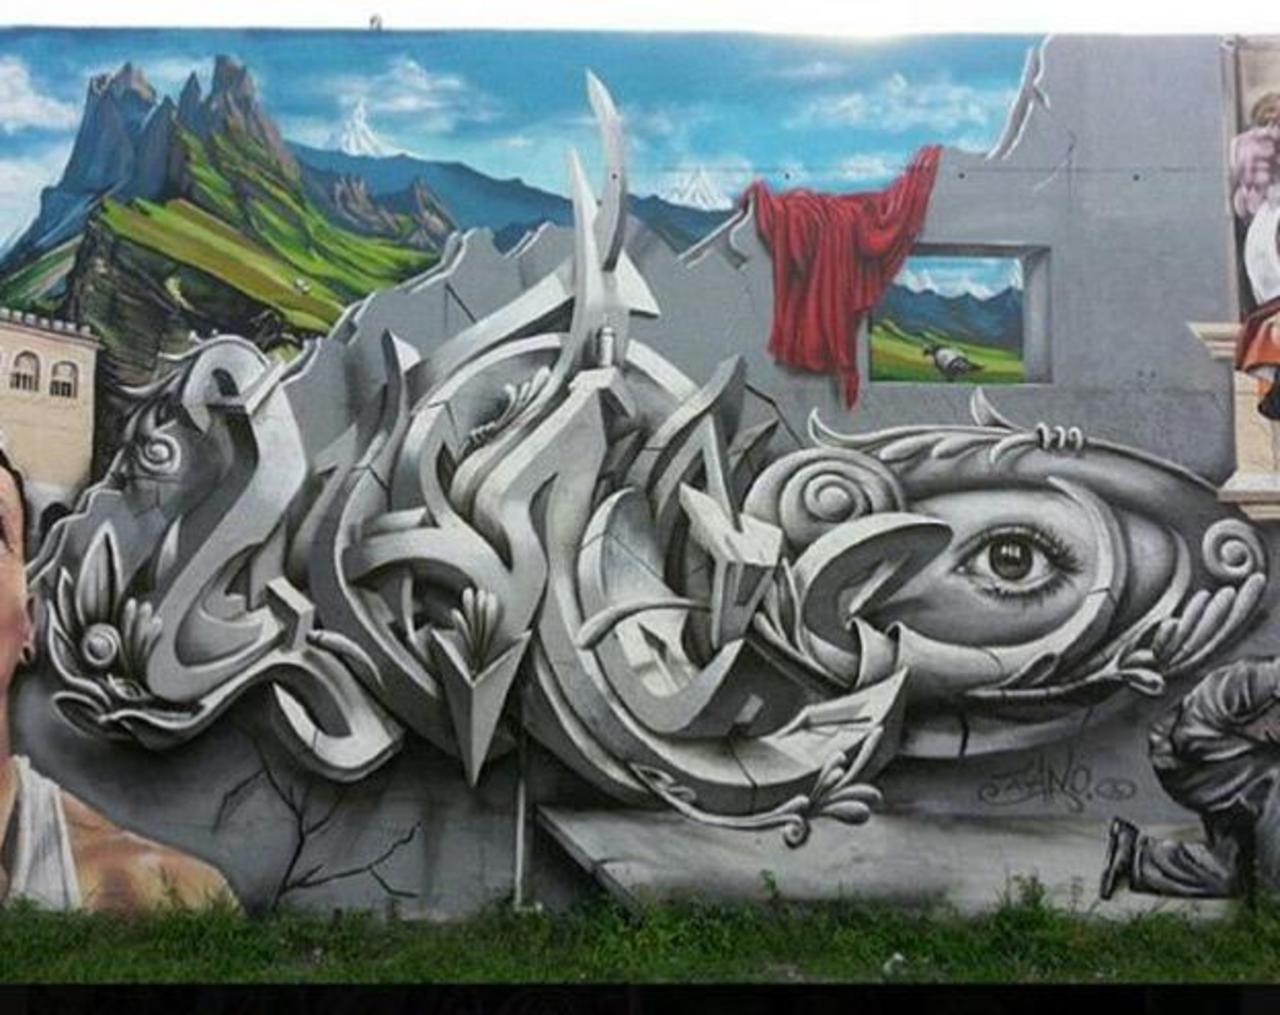 Street Art by Smog One

#art #mural #graffiti #streetart http://t.co/ONodW7bjOU